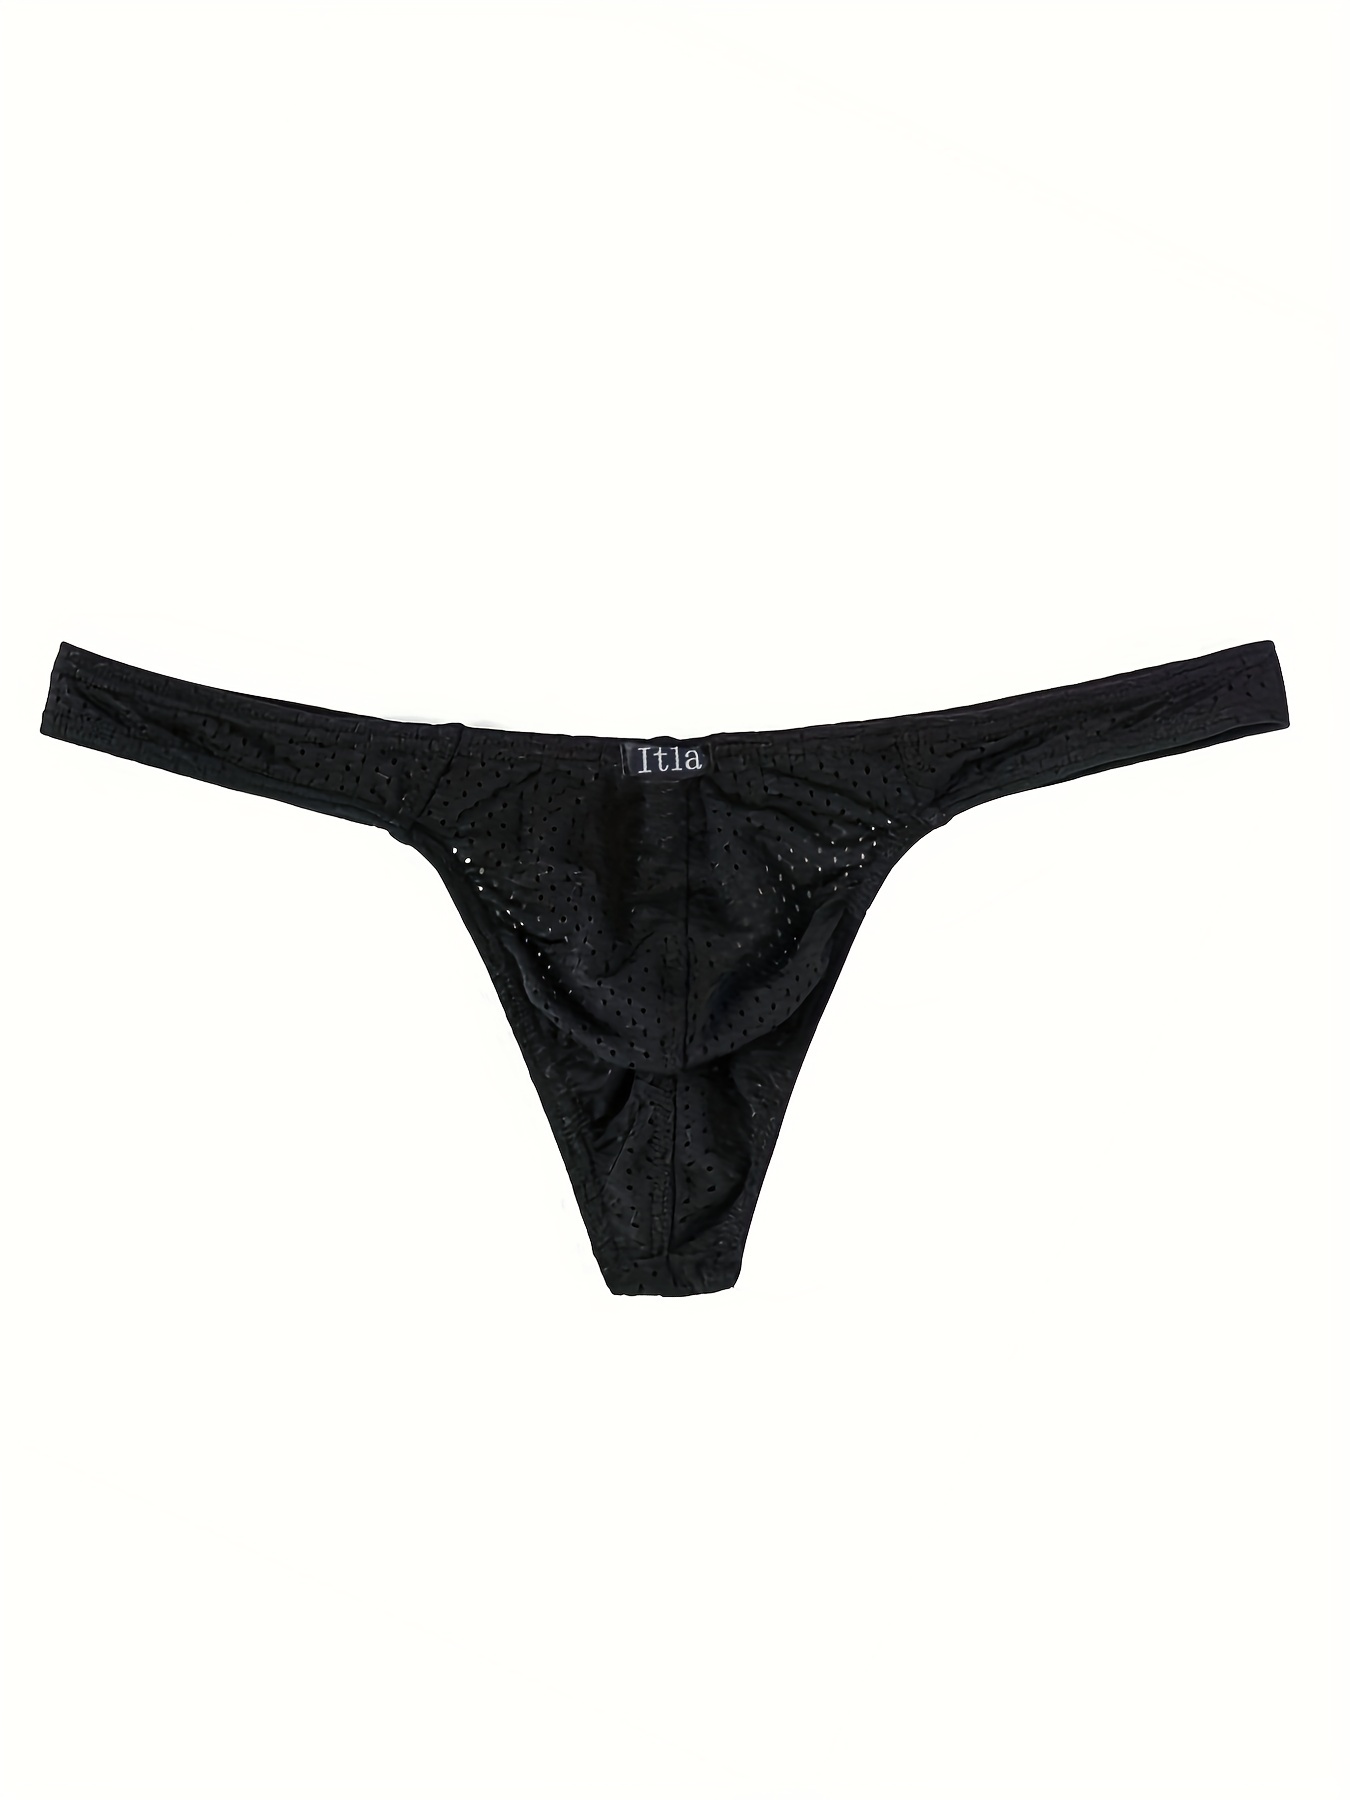 Mens Black G-String Pouch Thong T Back Underwear